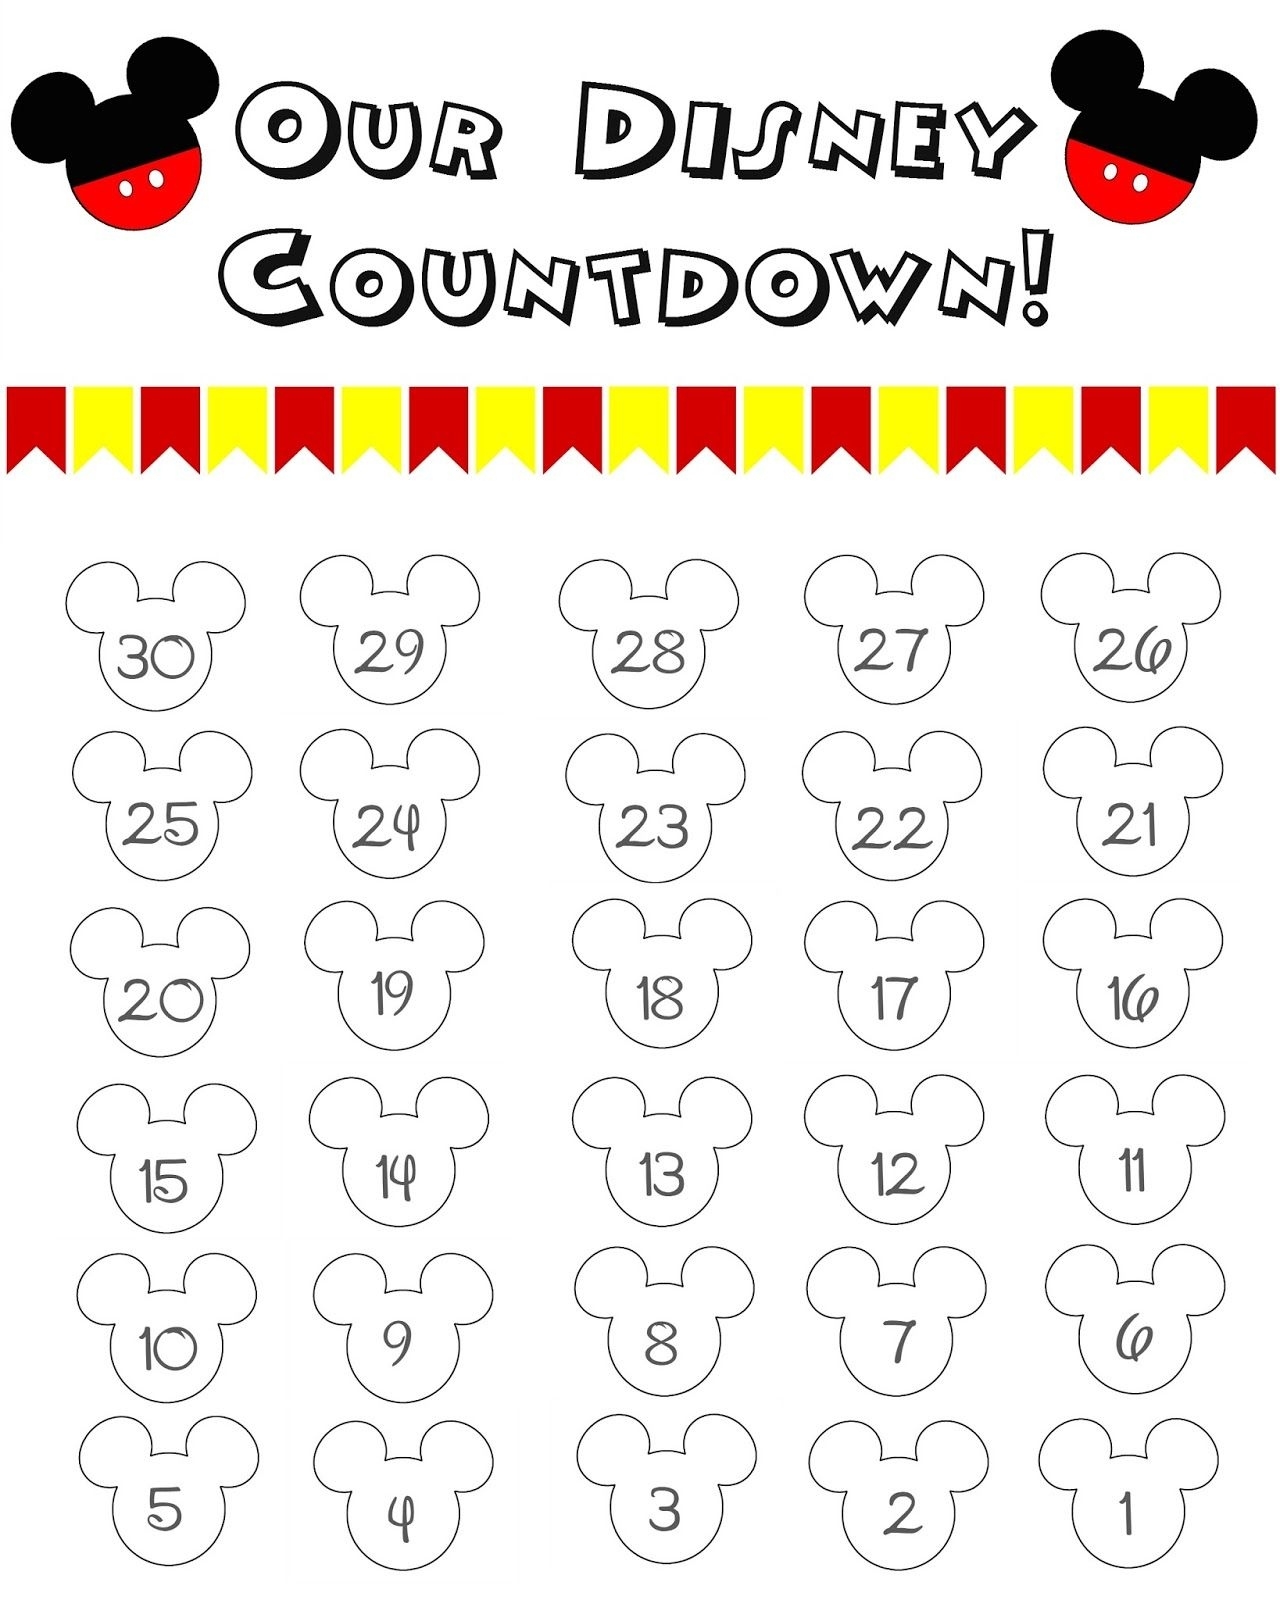 Disney World Countdown Calendar - Free Printable!! | Disney Disney Vacation Club Countdown Calendar